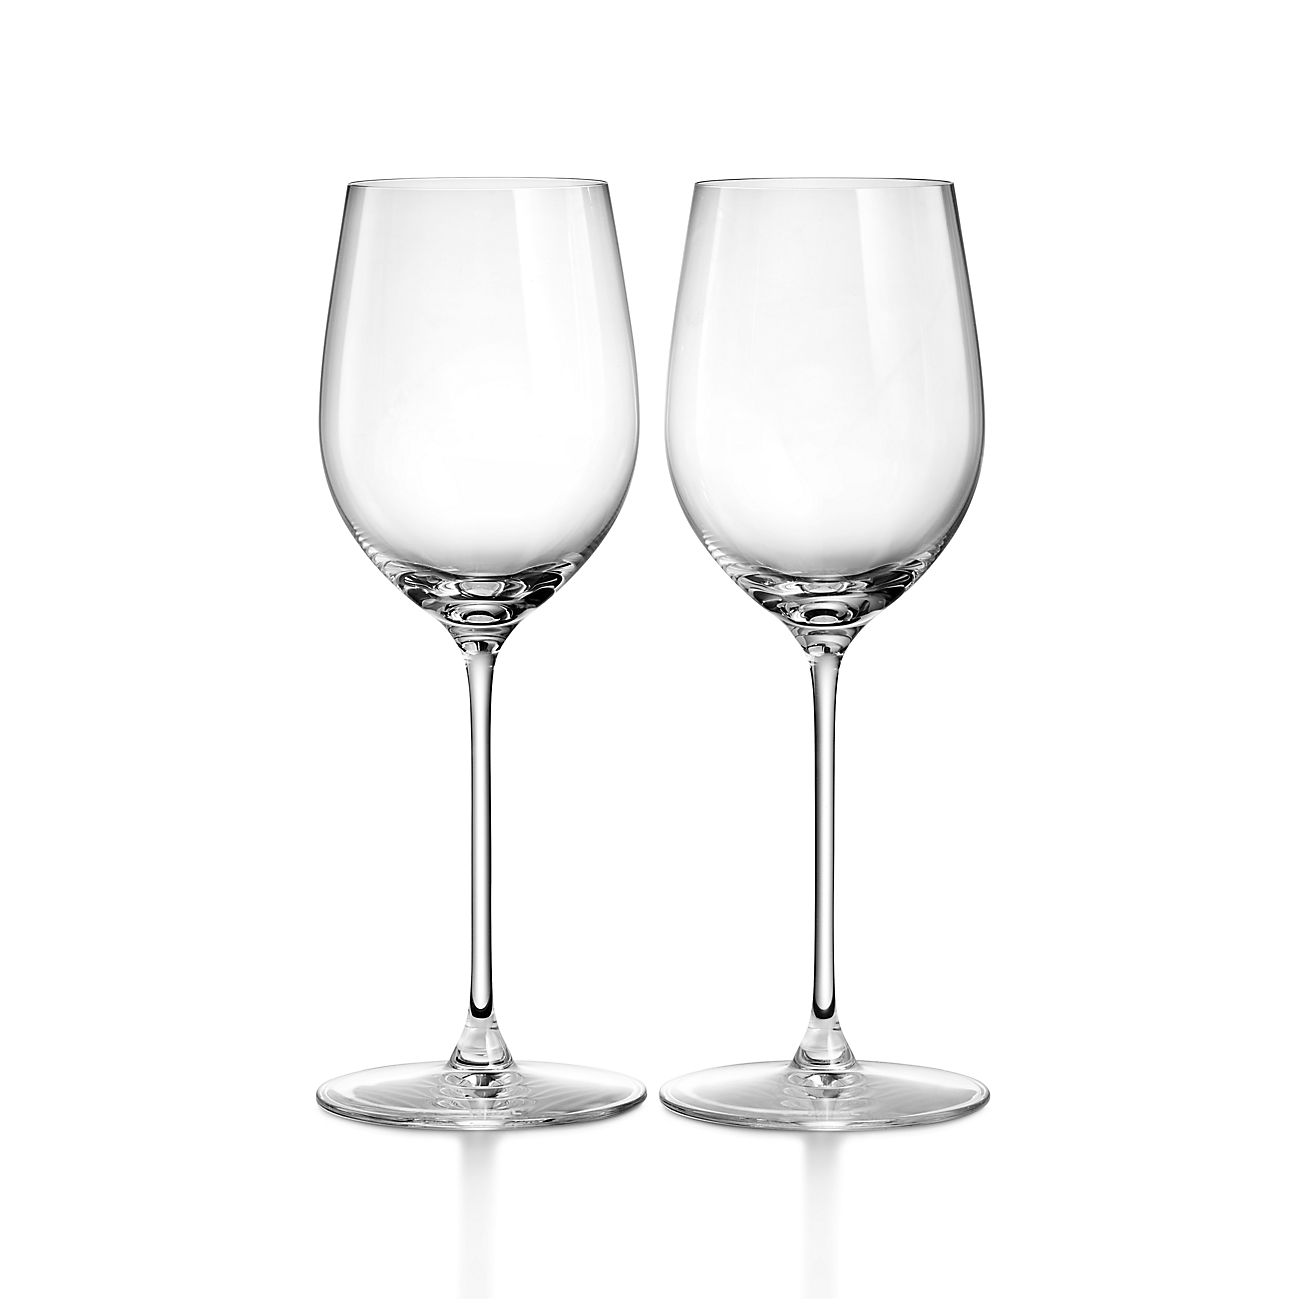 https://media.tiffany.com/is/image/Tiffany/EcomItemL2/tiffany-home-essentialswhite-wine-glasses-73480396_1062587_ED.jpg